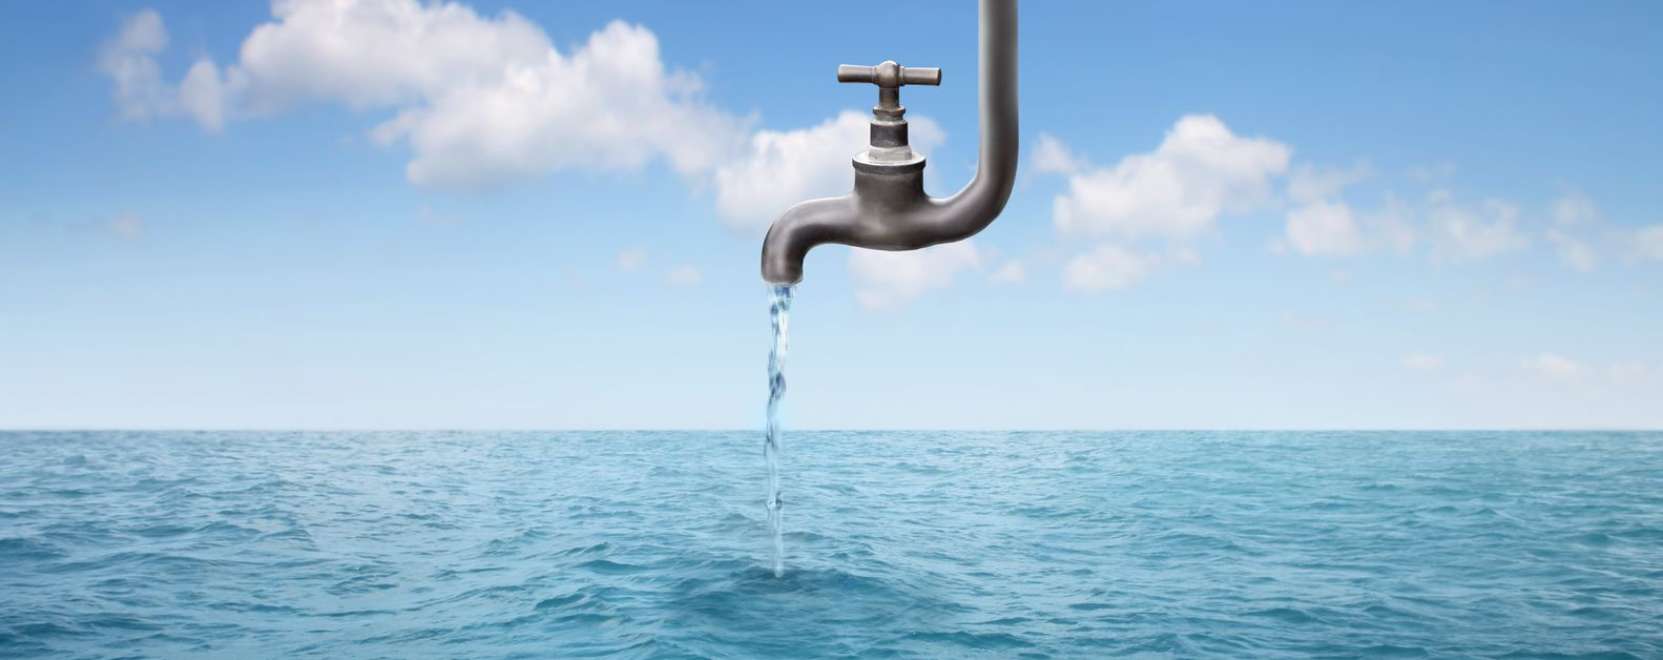 Intelligens zuhanyfej a víztakarékossághoz